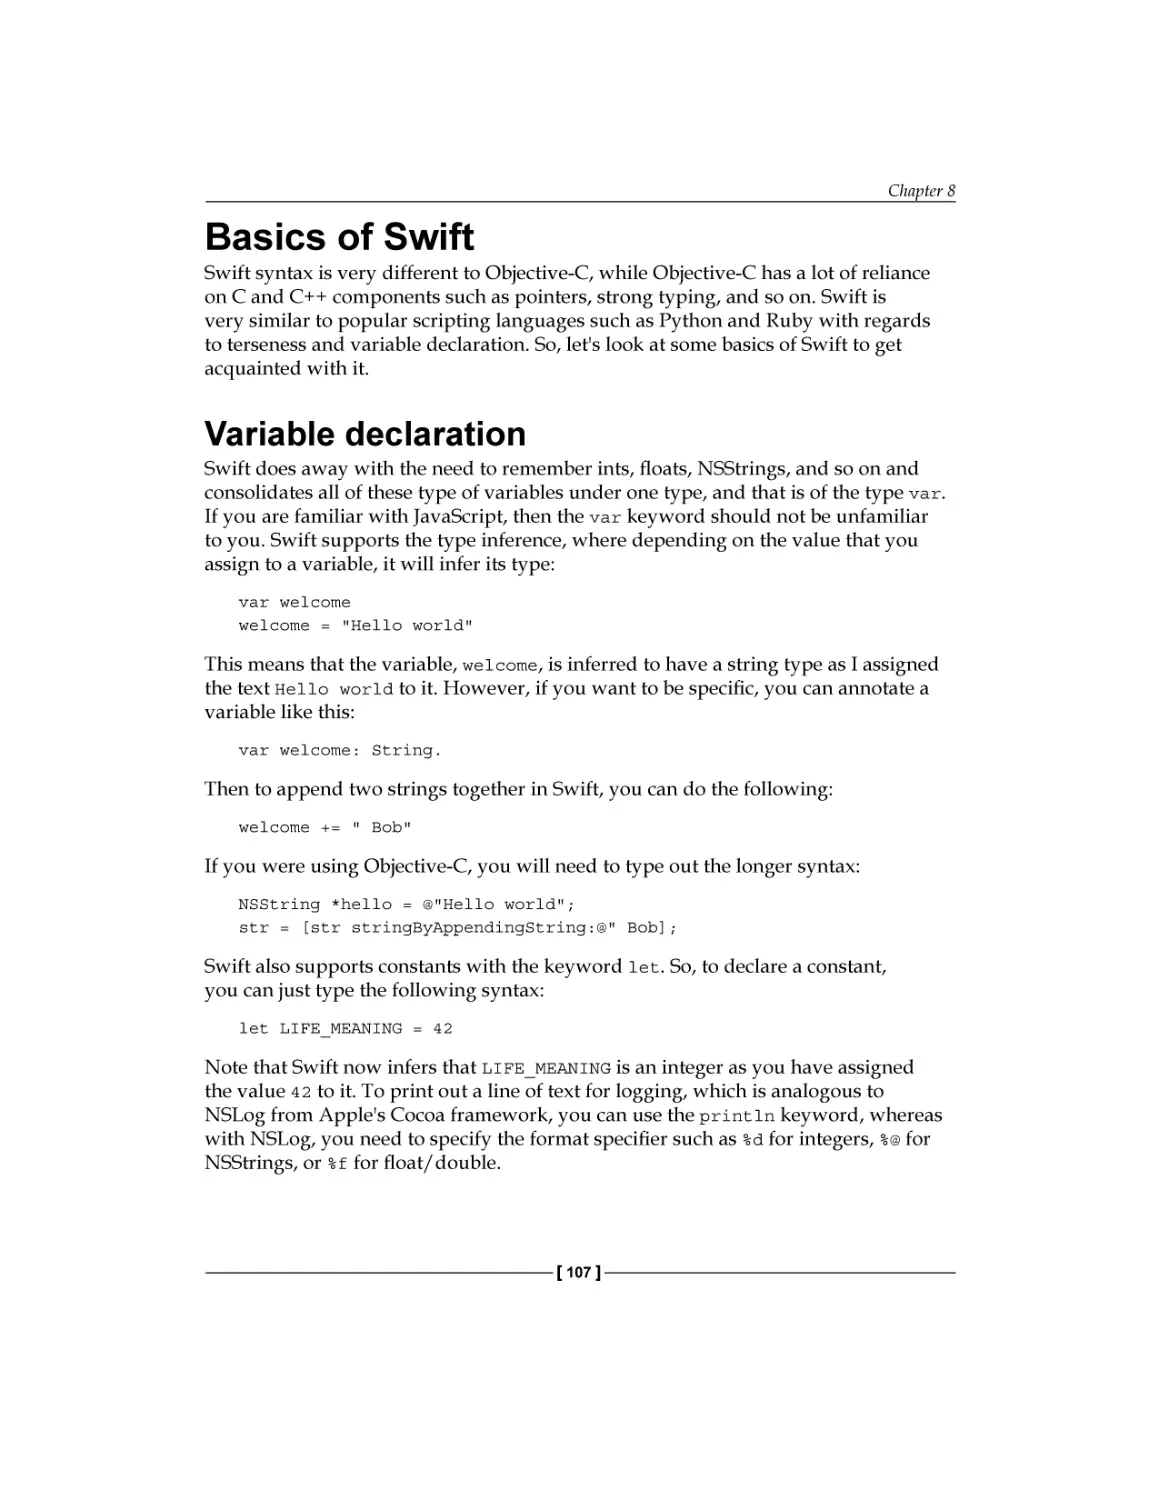 Basics of Swift
Variable declaration